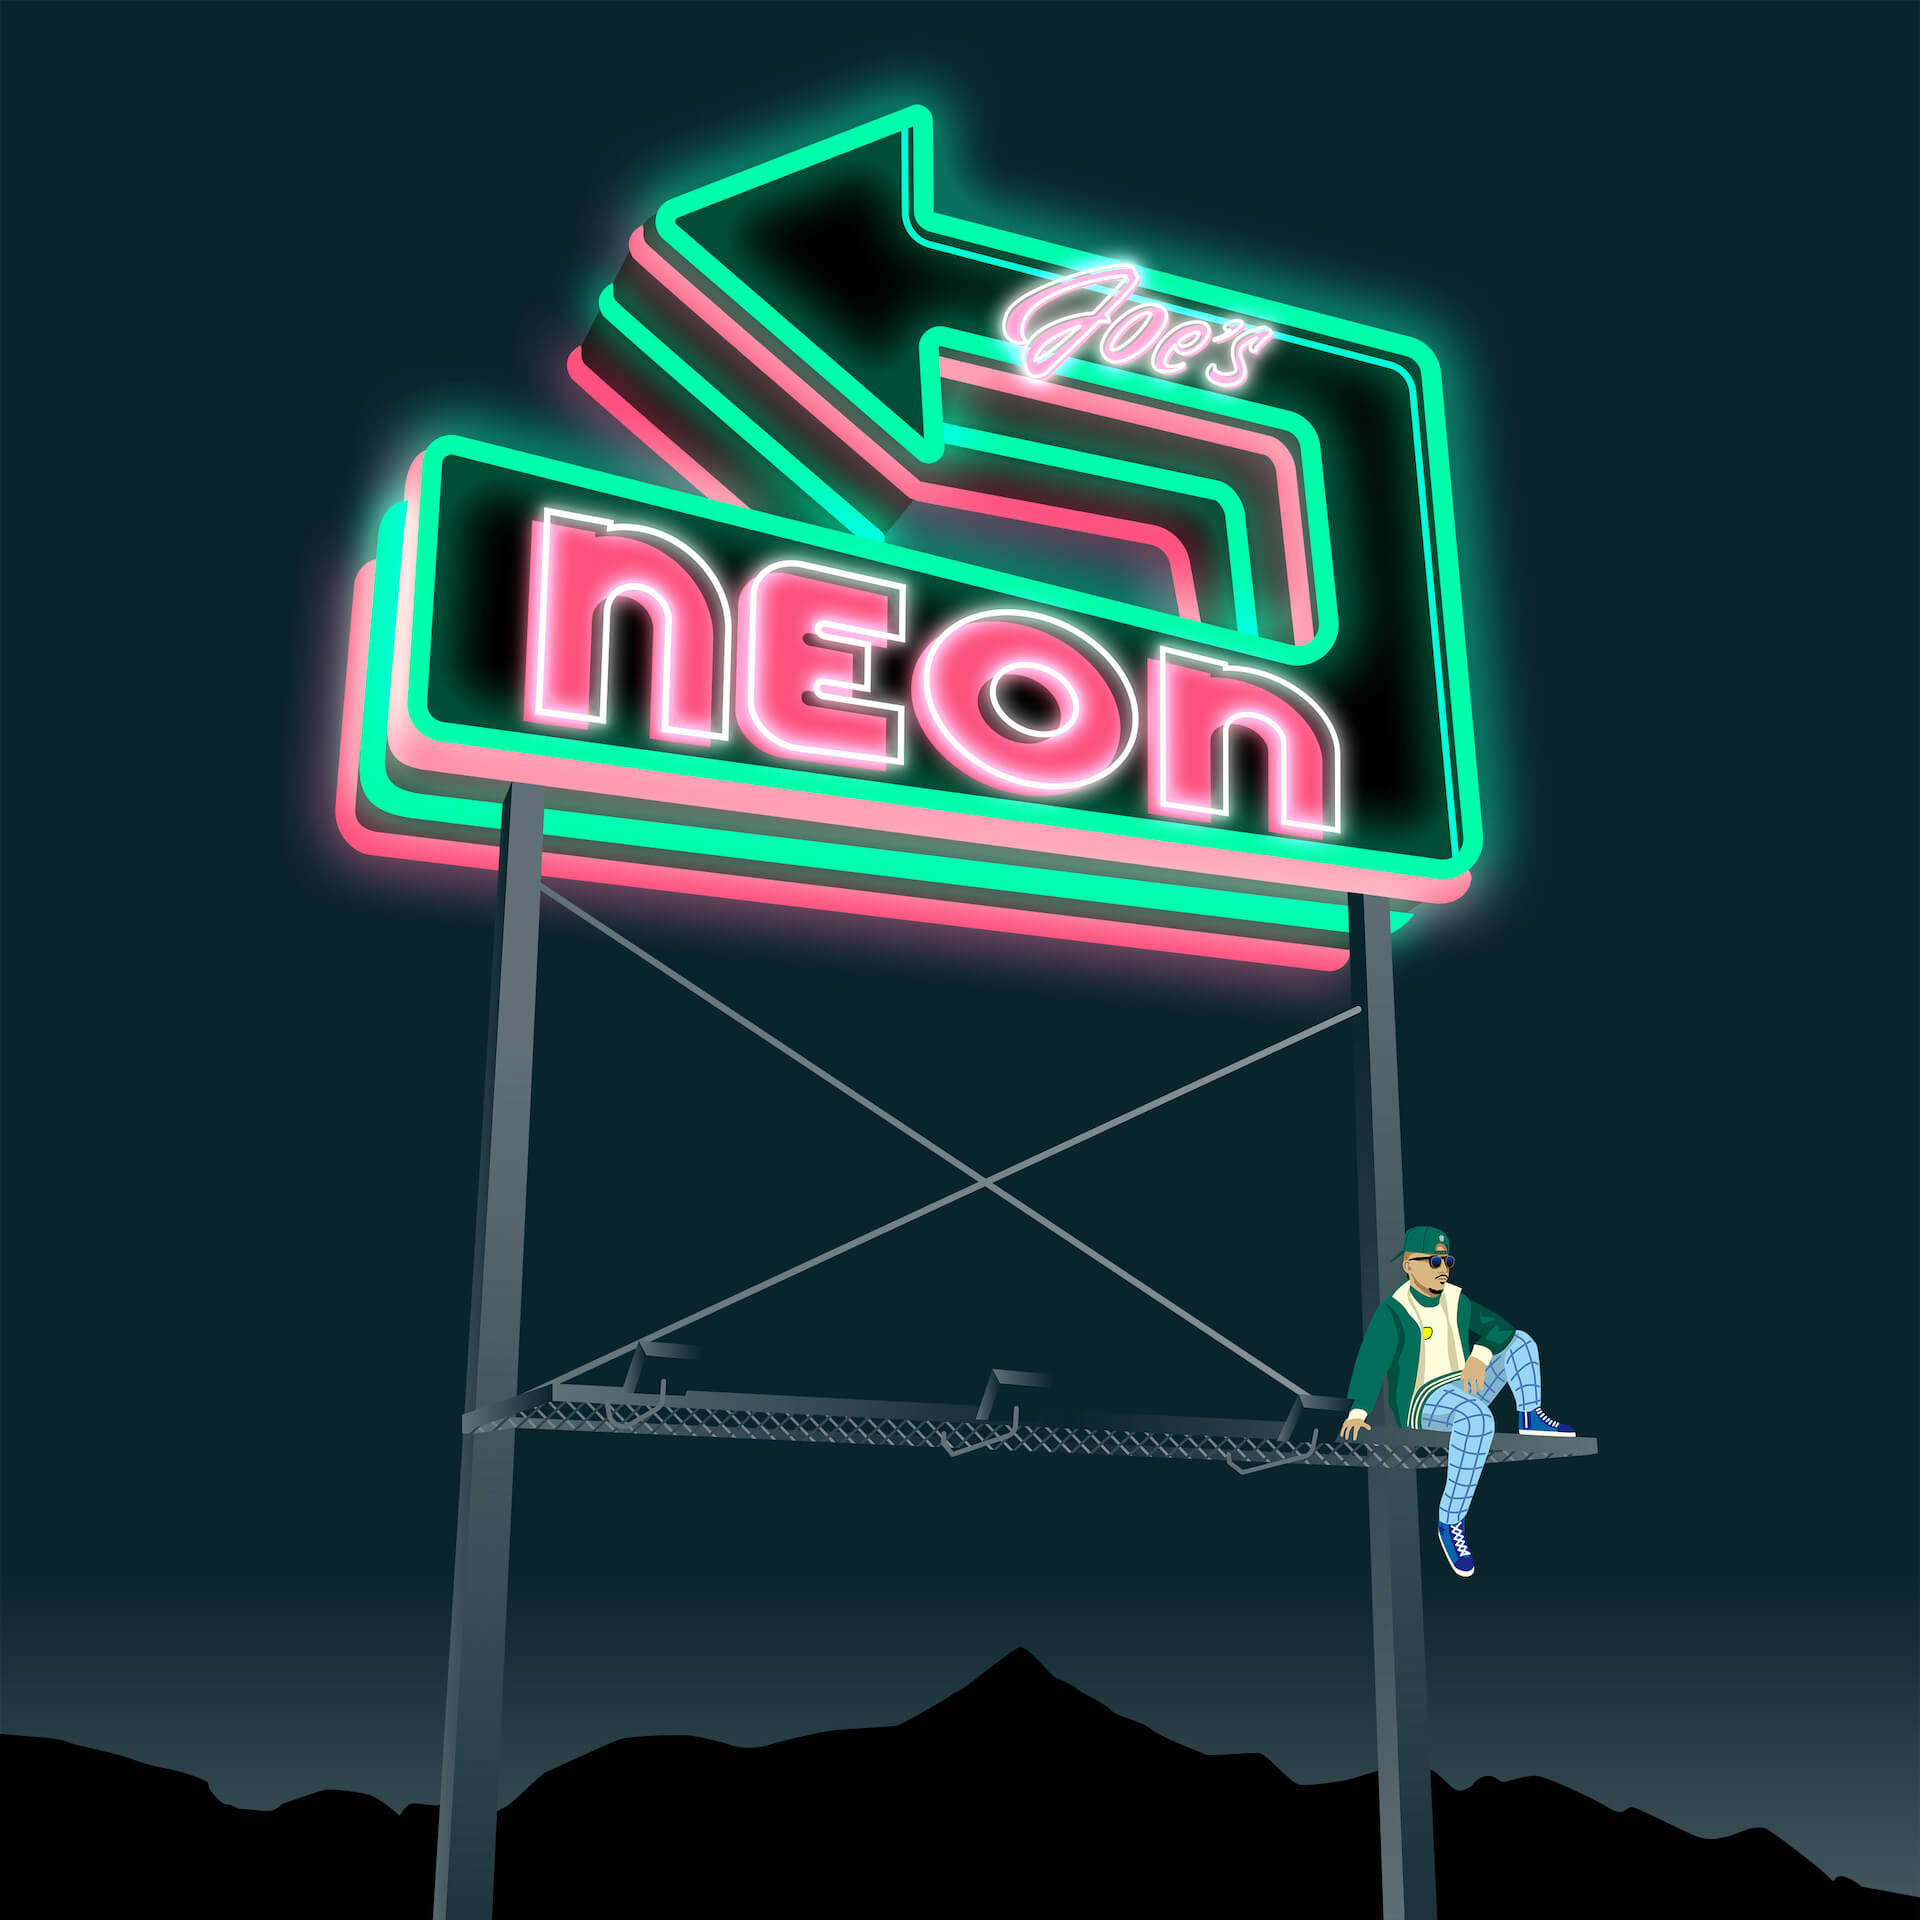 KOJOEの人気ビートアルバムシリーズ最新作『Joe's Neon』がリリース！ music_211221_kojoe_joesneon_021